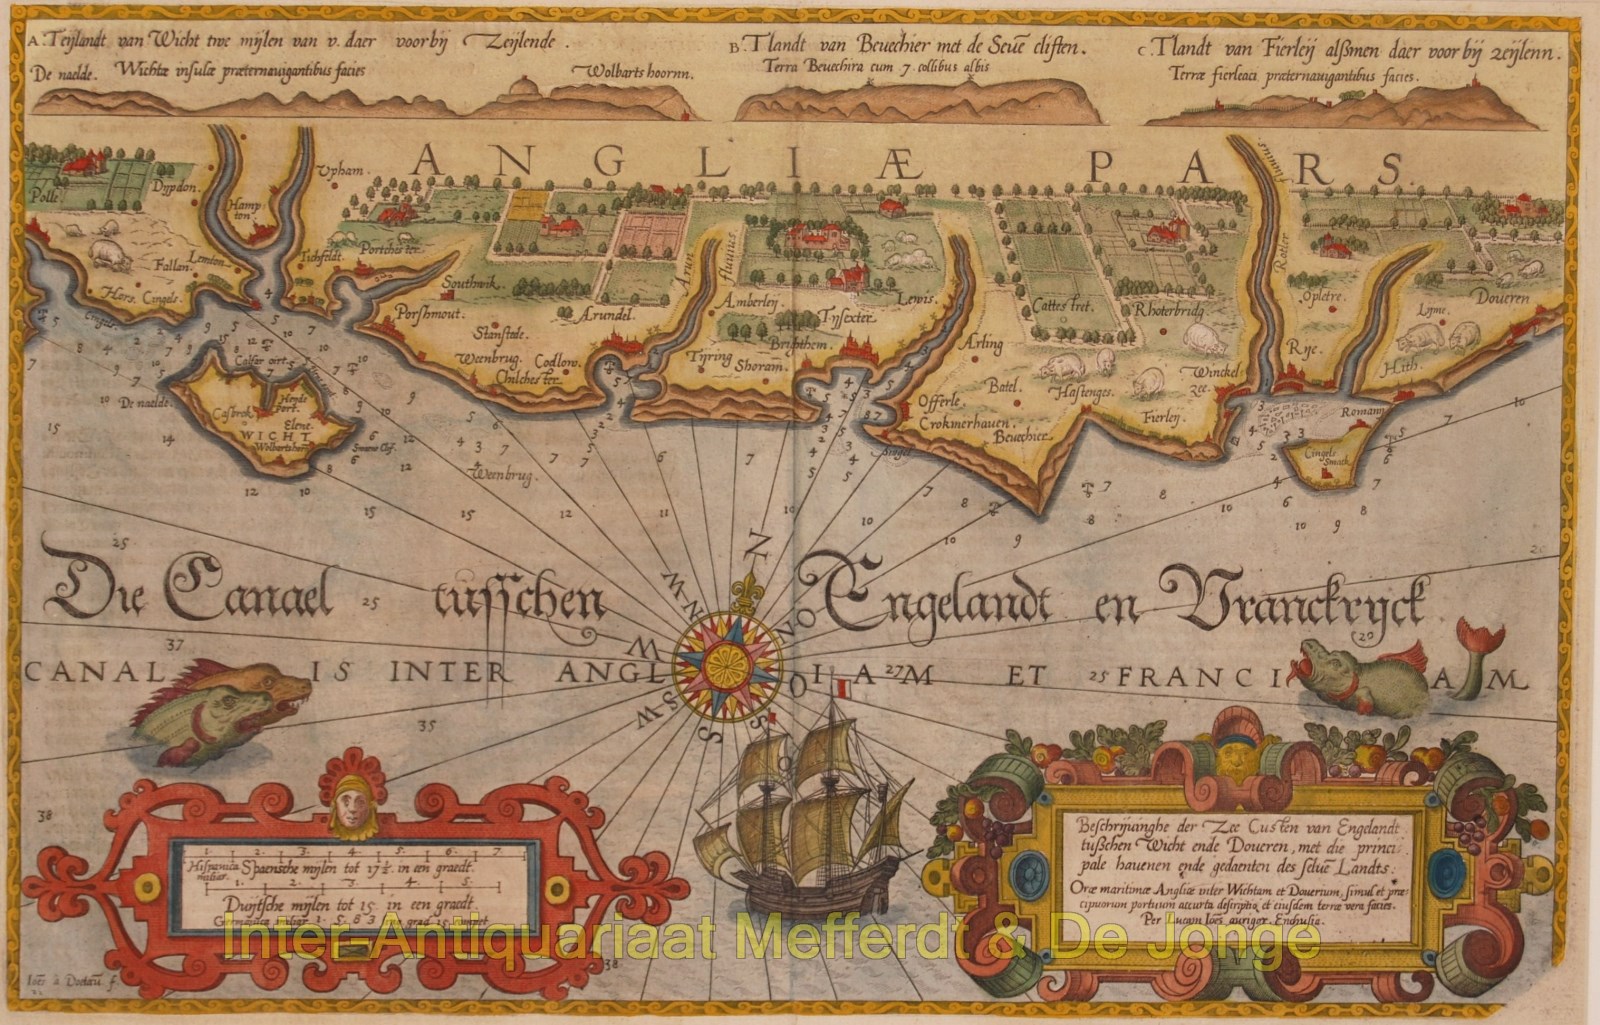 Waghenaer-- Lucas Janszn. - England, coastal chart between Wight and Dover - Waghenaer, 1586